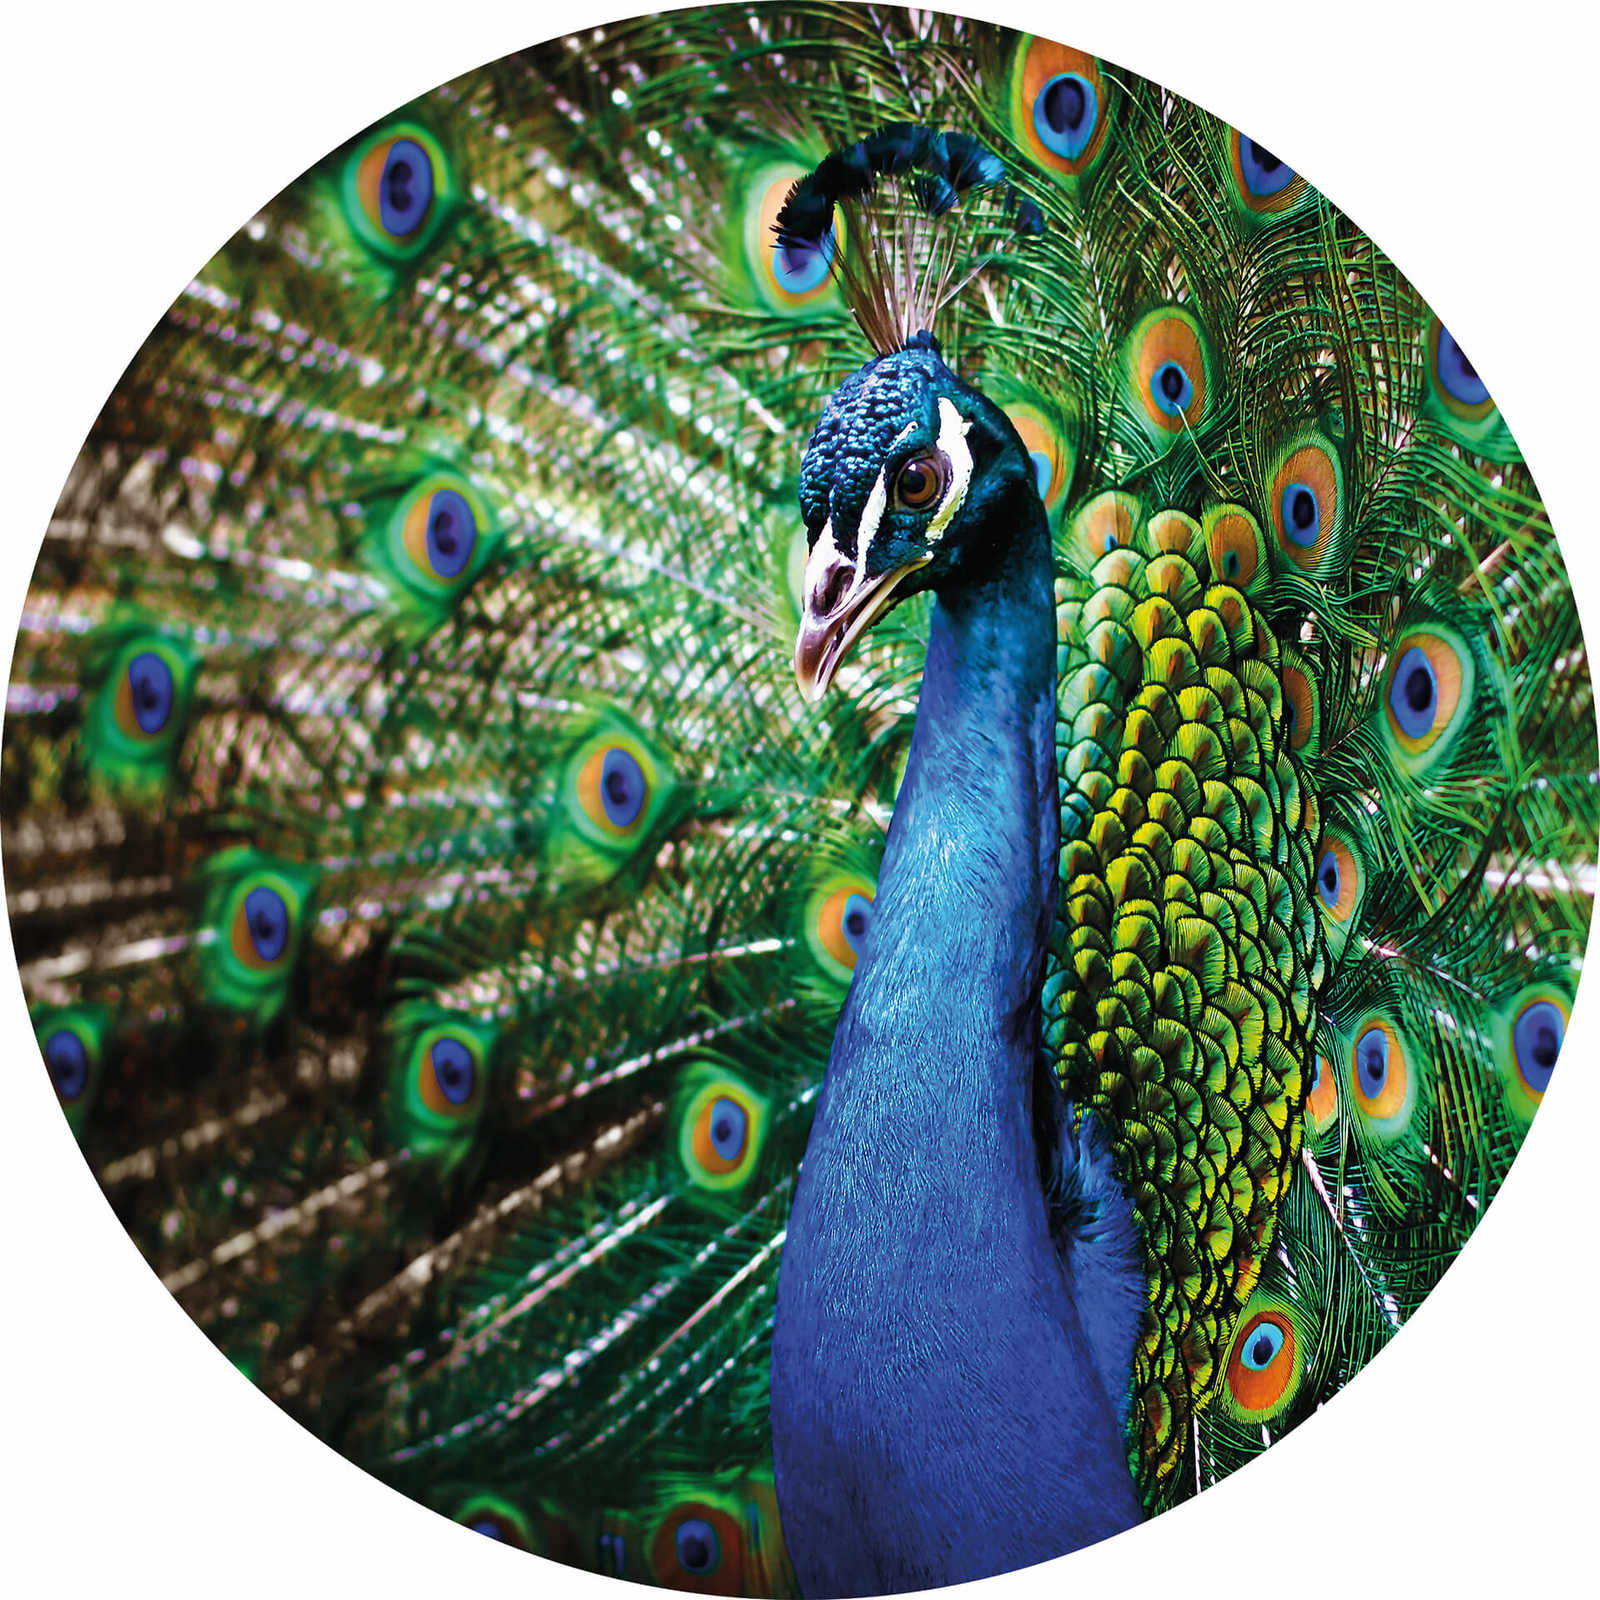         Photo wallpaper round peacock - green, blue, yellow
    